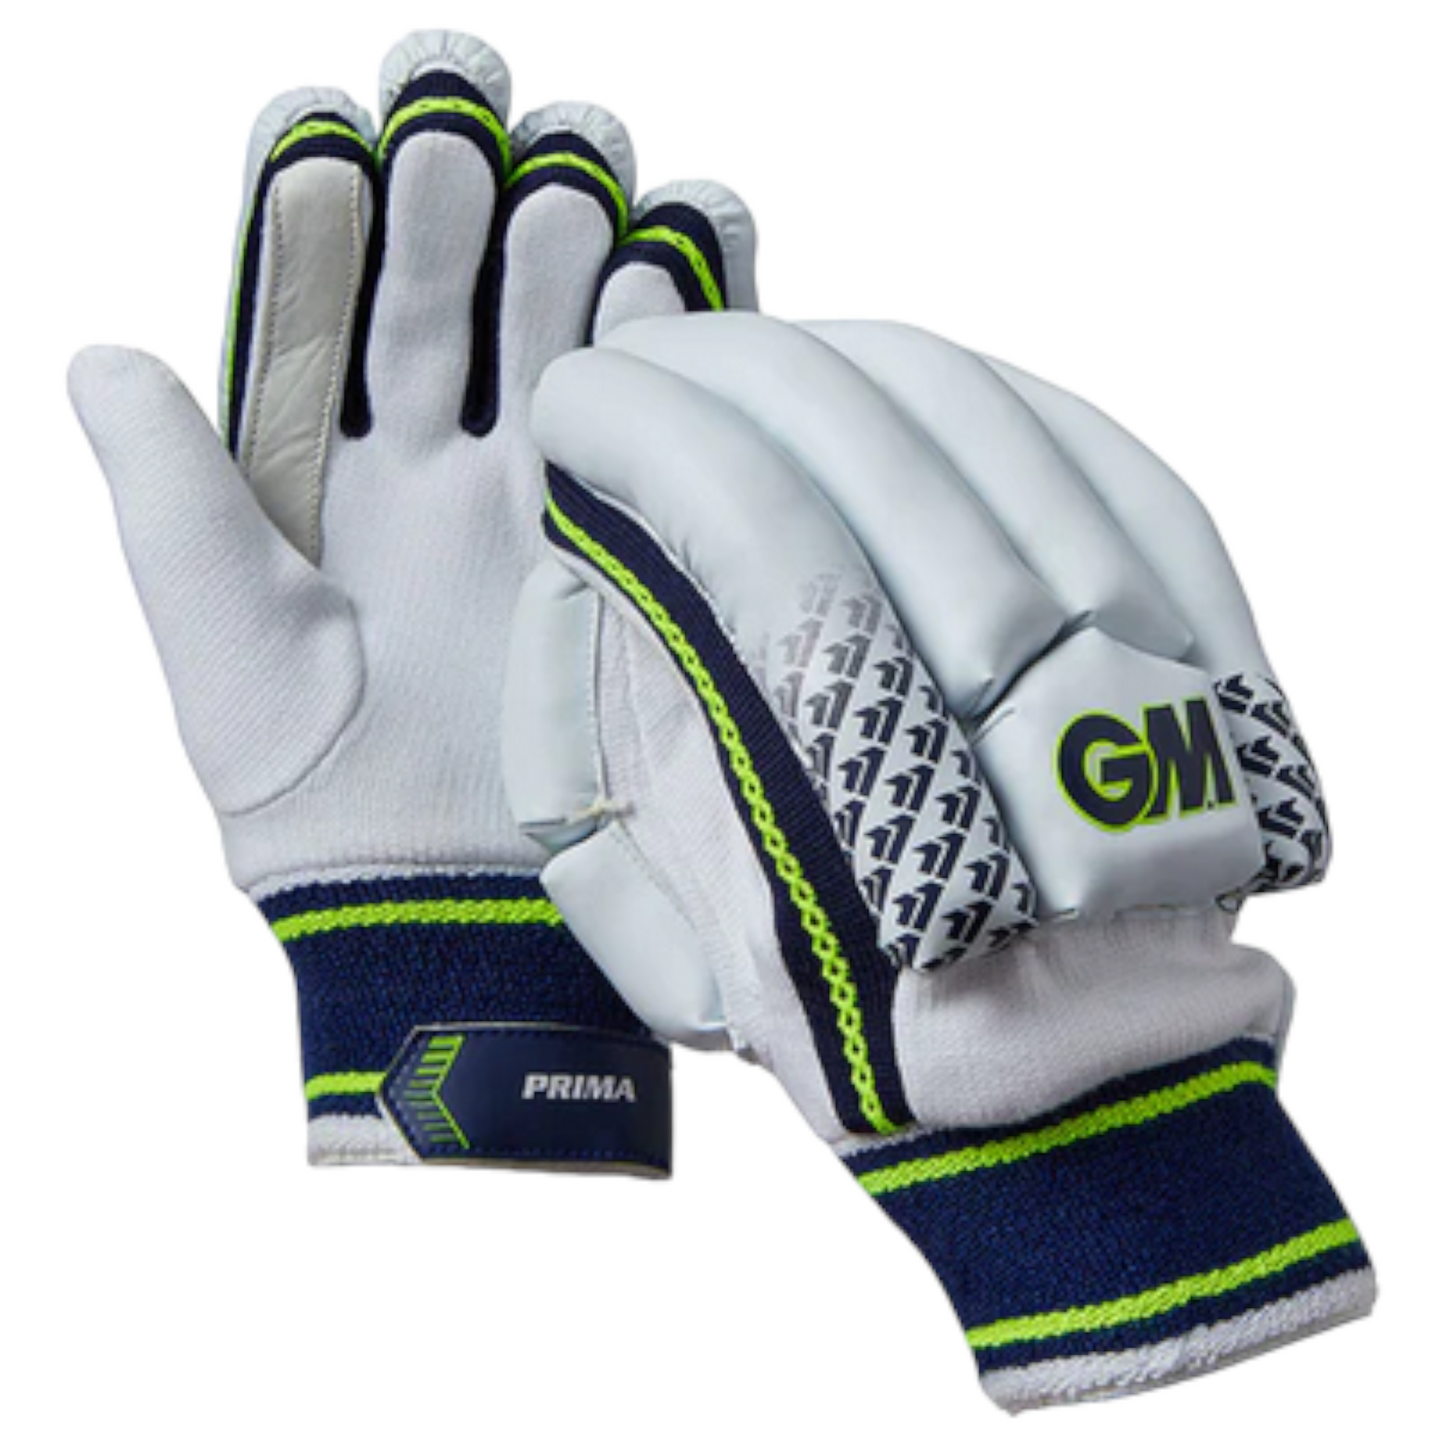 GM Prima Batting Gloves